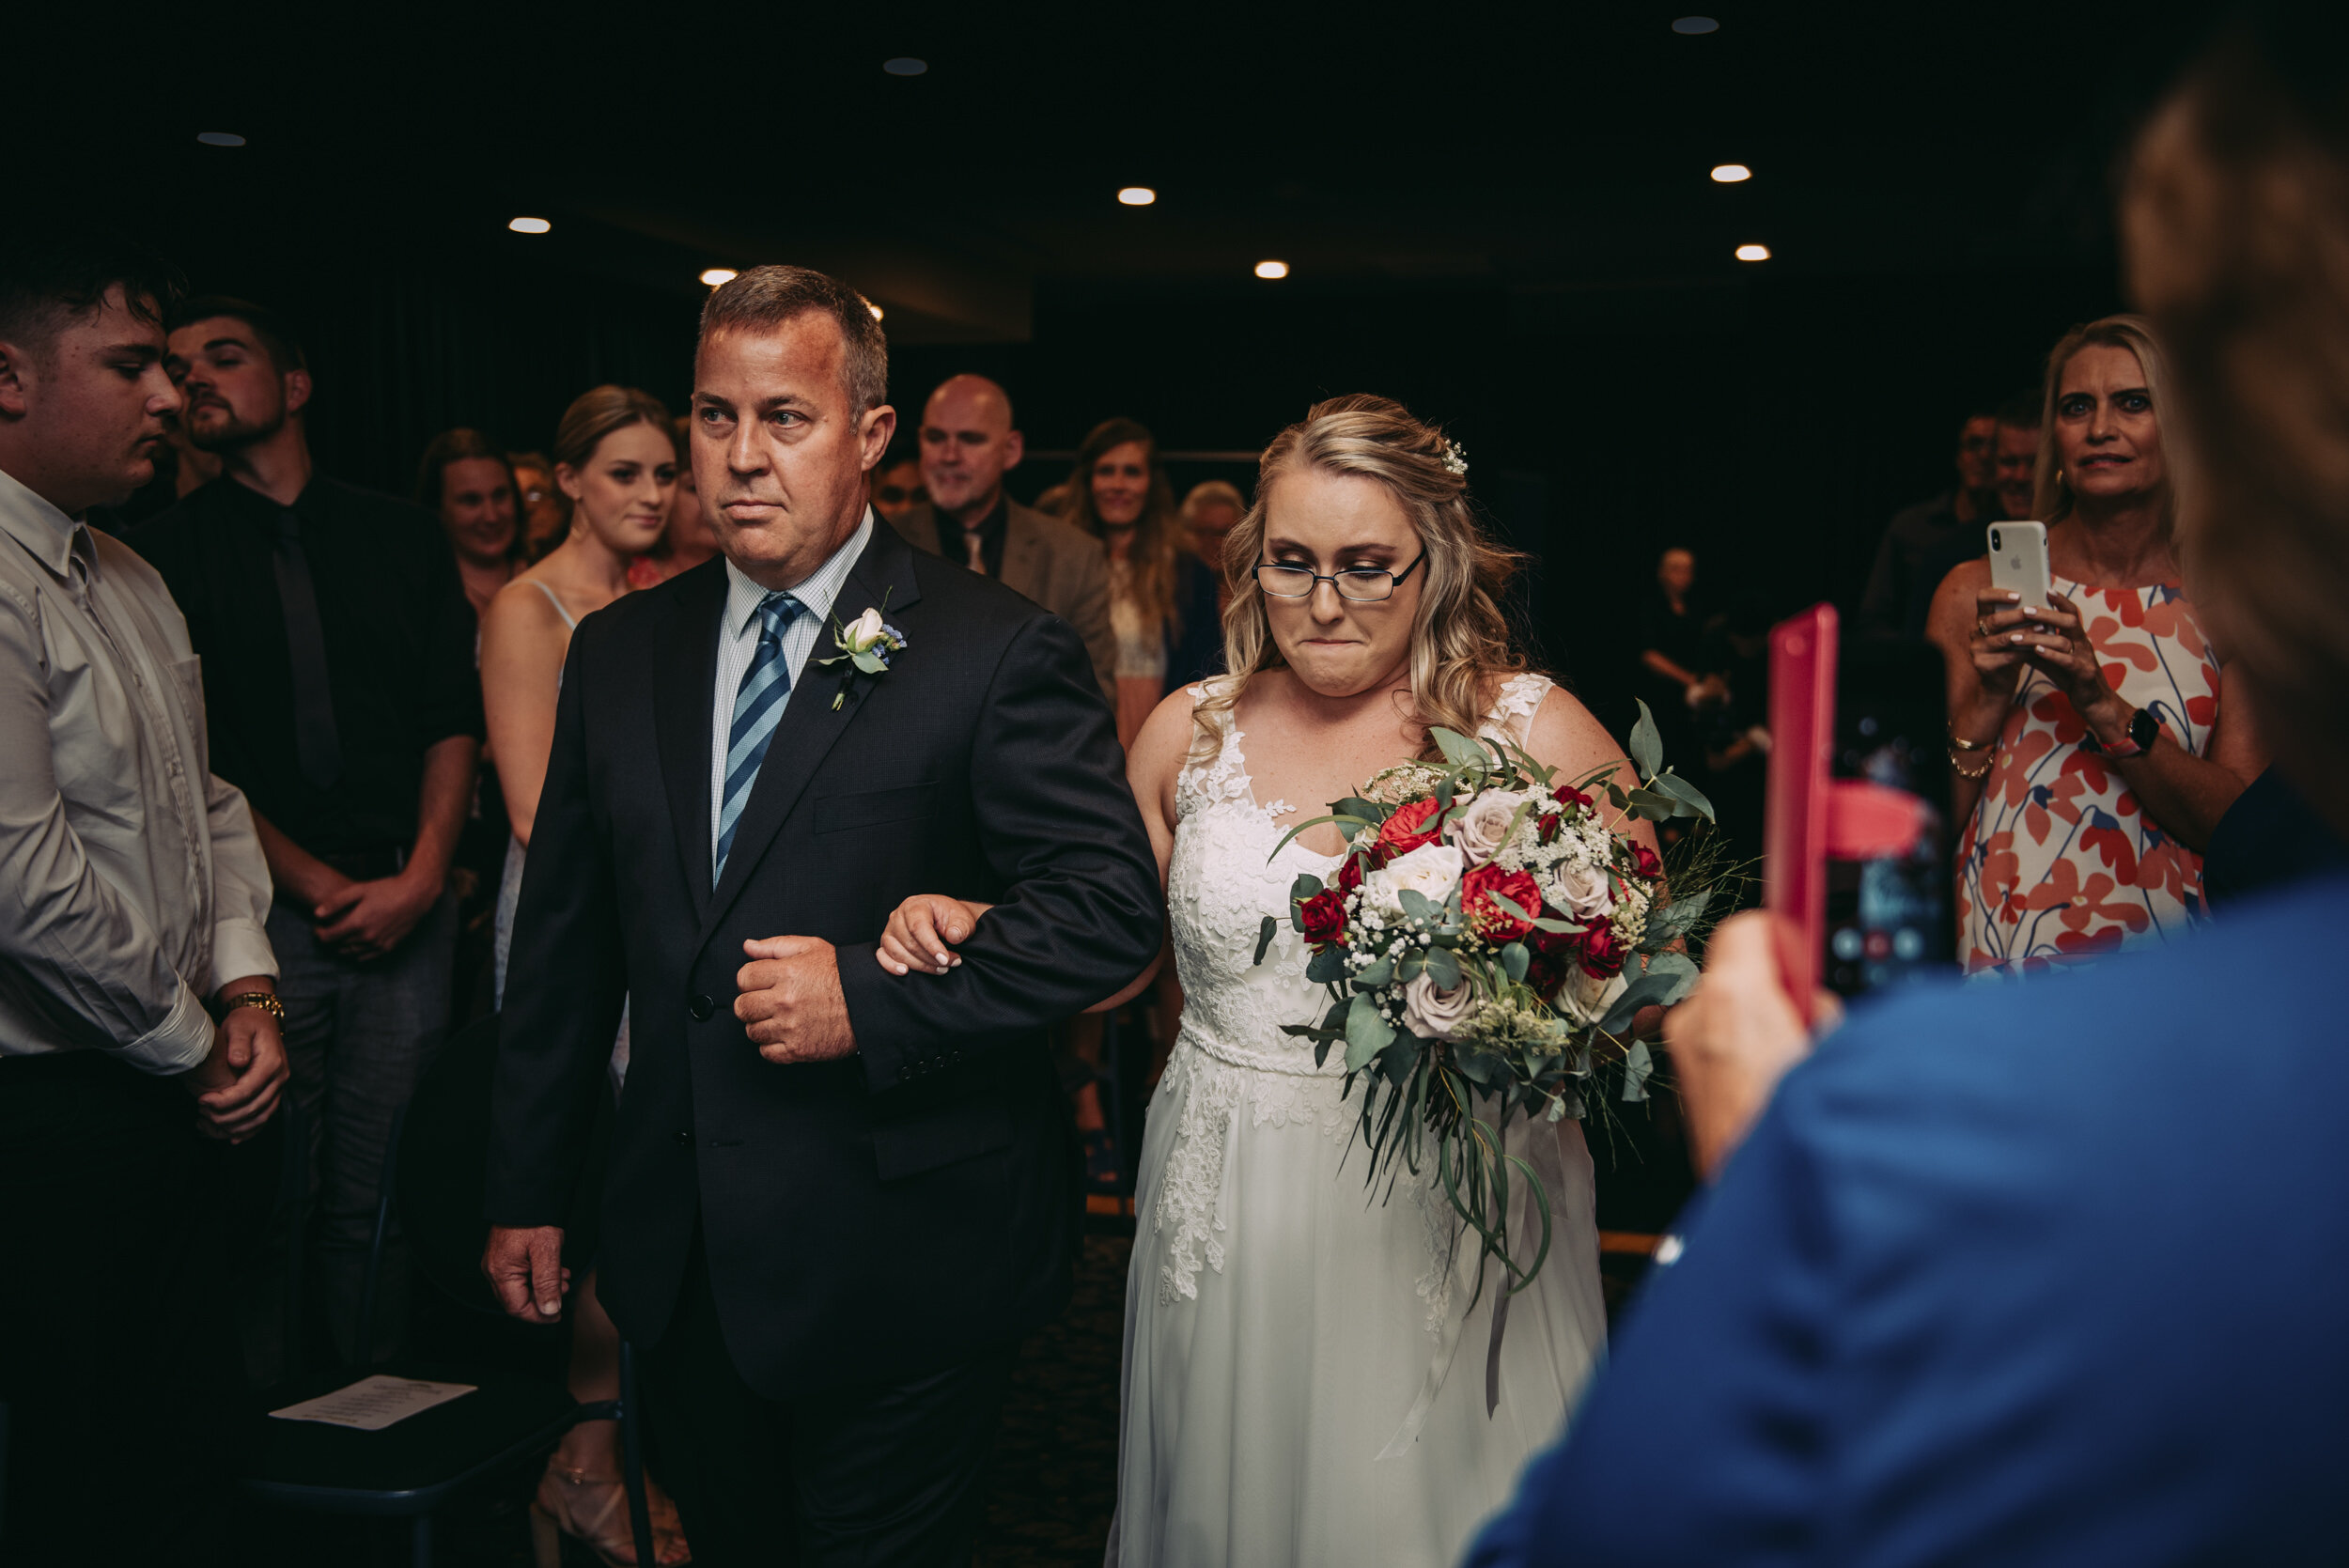 Auckland Wedding Photographer | Auckland Wedding Videographer | Sorrento Wedding | Auckland Photographer | Auckland Wedding Venue 